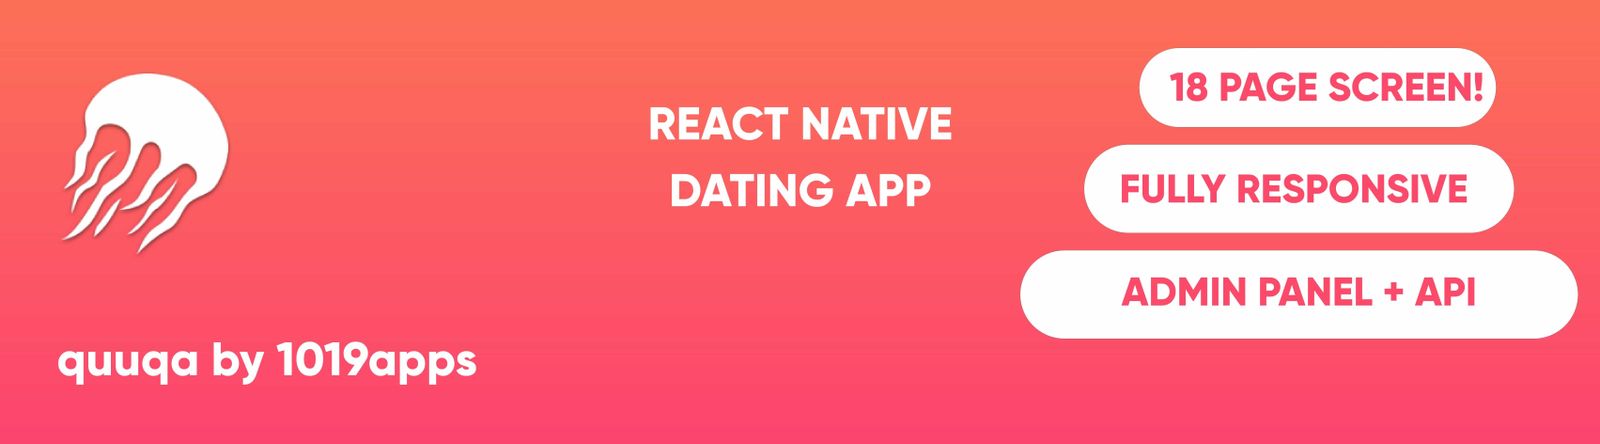 quuqa: React Native Dating App - 1